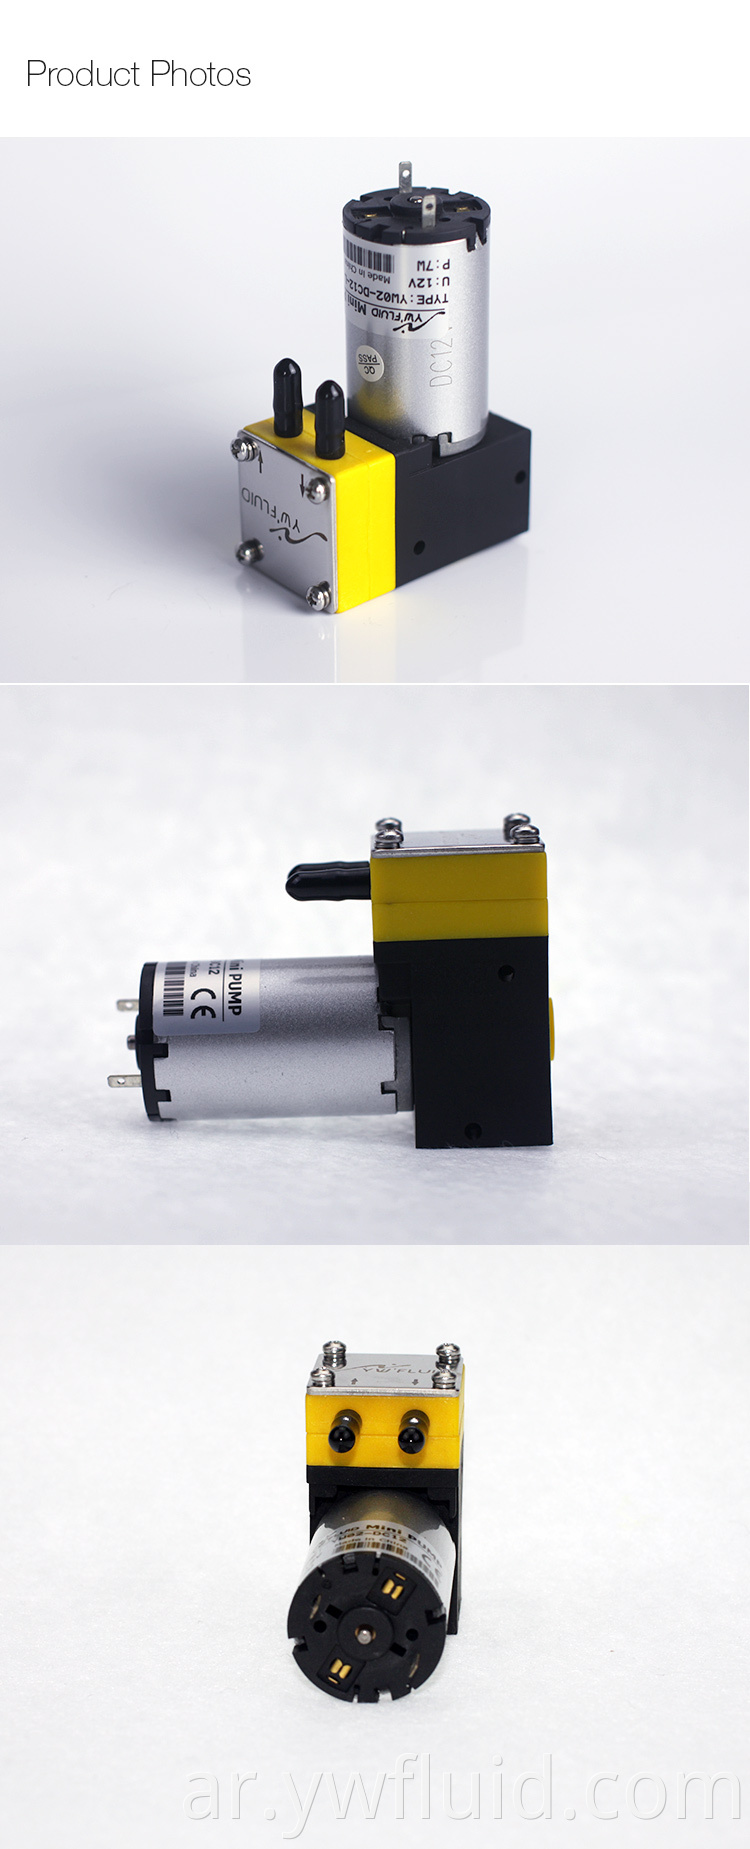 ywfluid micro vacuum Series 12V/24V DC/BLDC Brush Motor Mini Air Pump